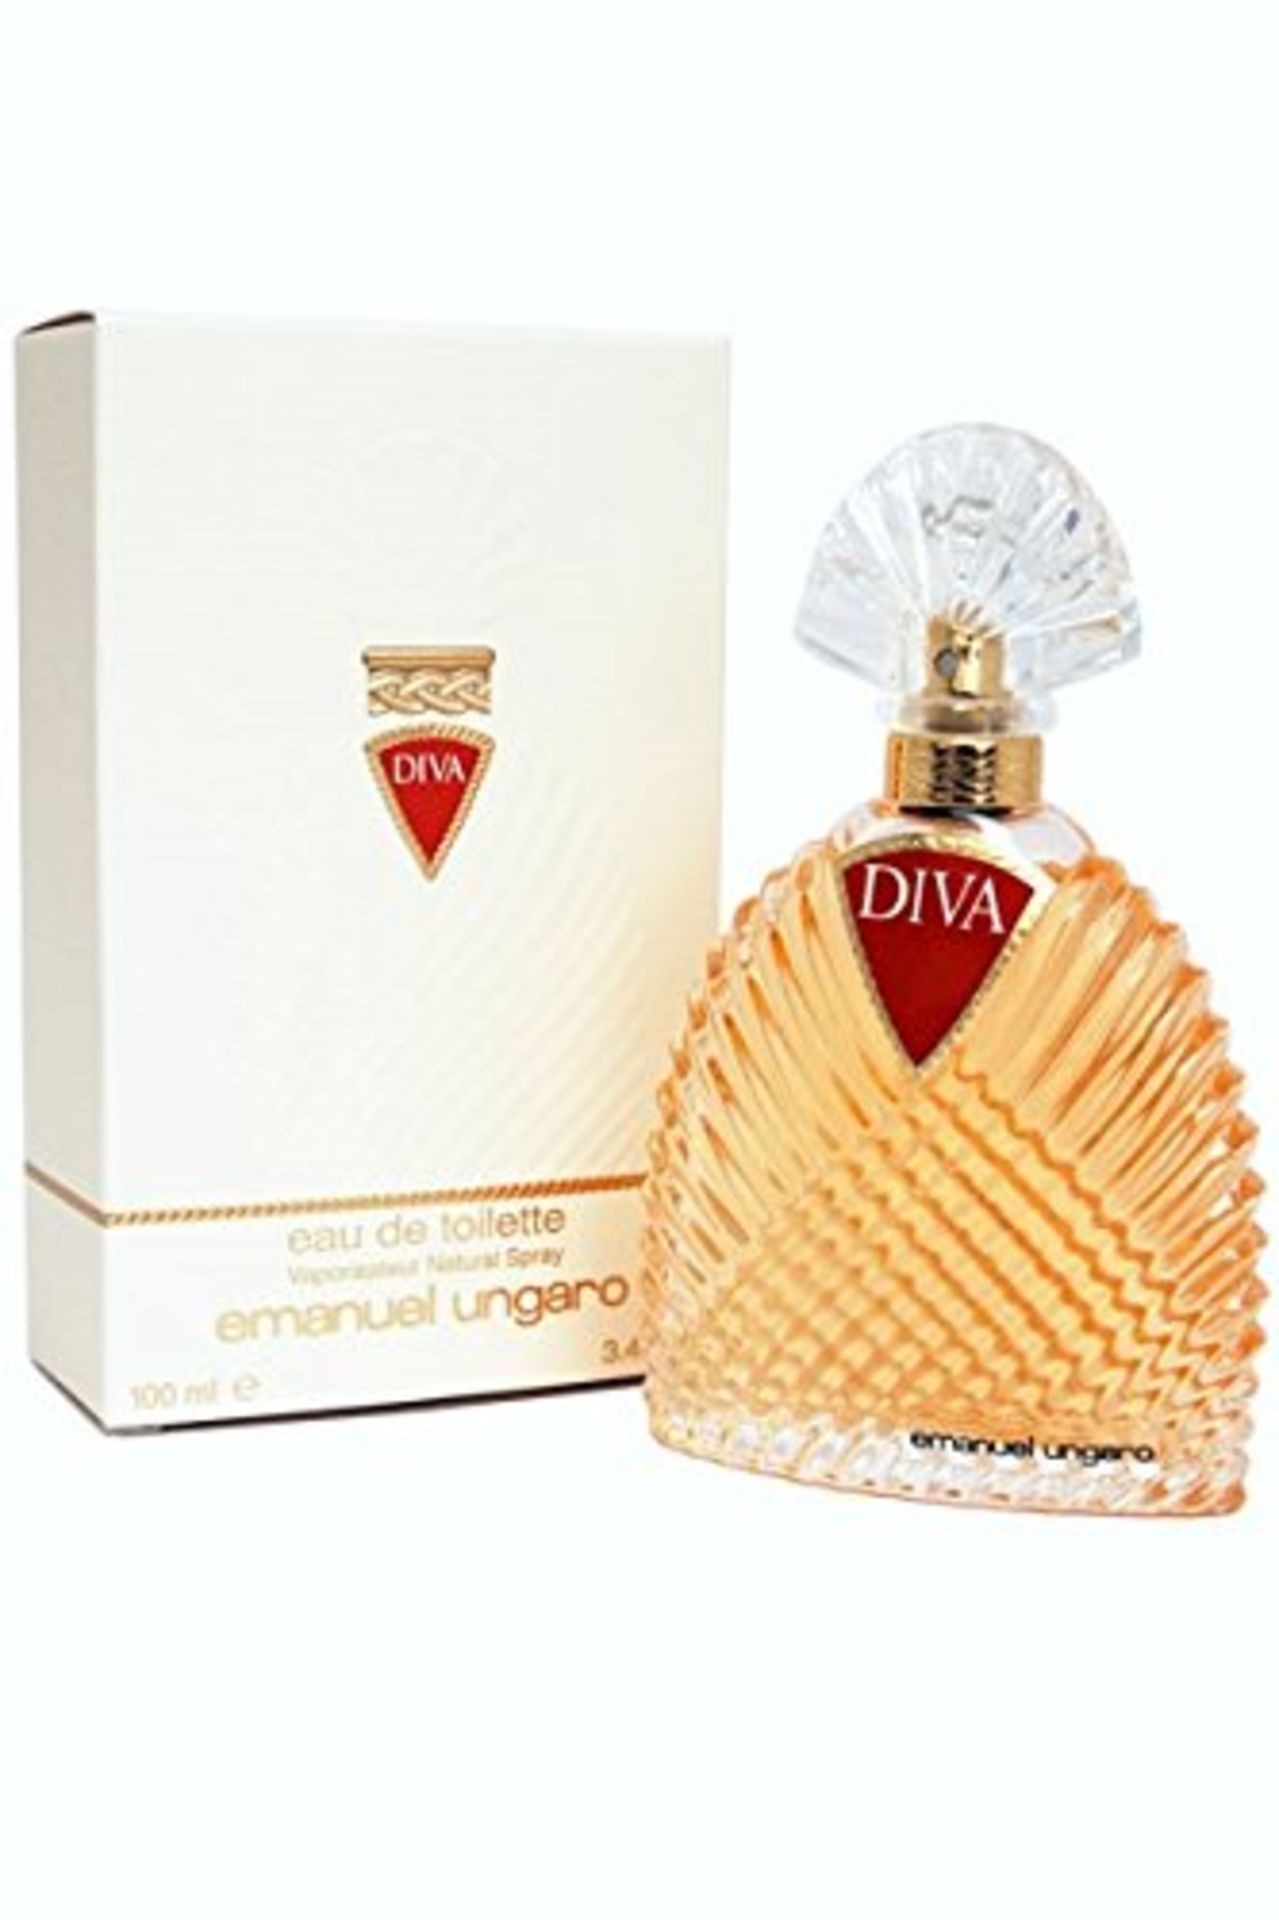 Diva by Emanuel Ungaro Eau de Toilette Spray 100ml_RRP £31.00_Brand new,Sealed, Genuine.

a blend of - Image 2 of 2